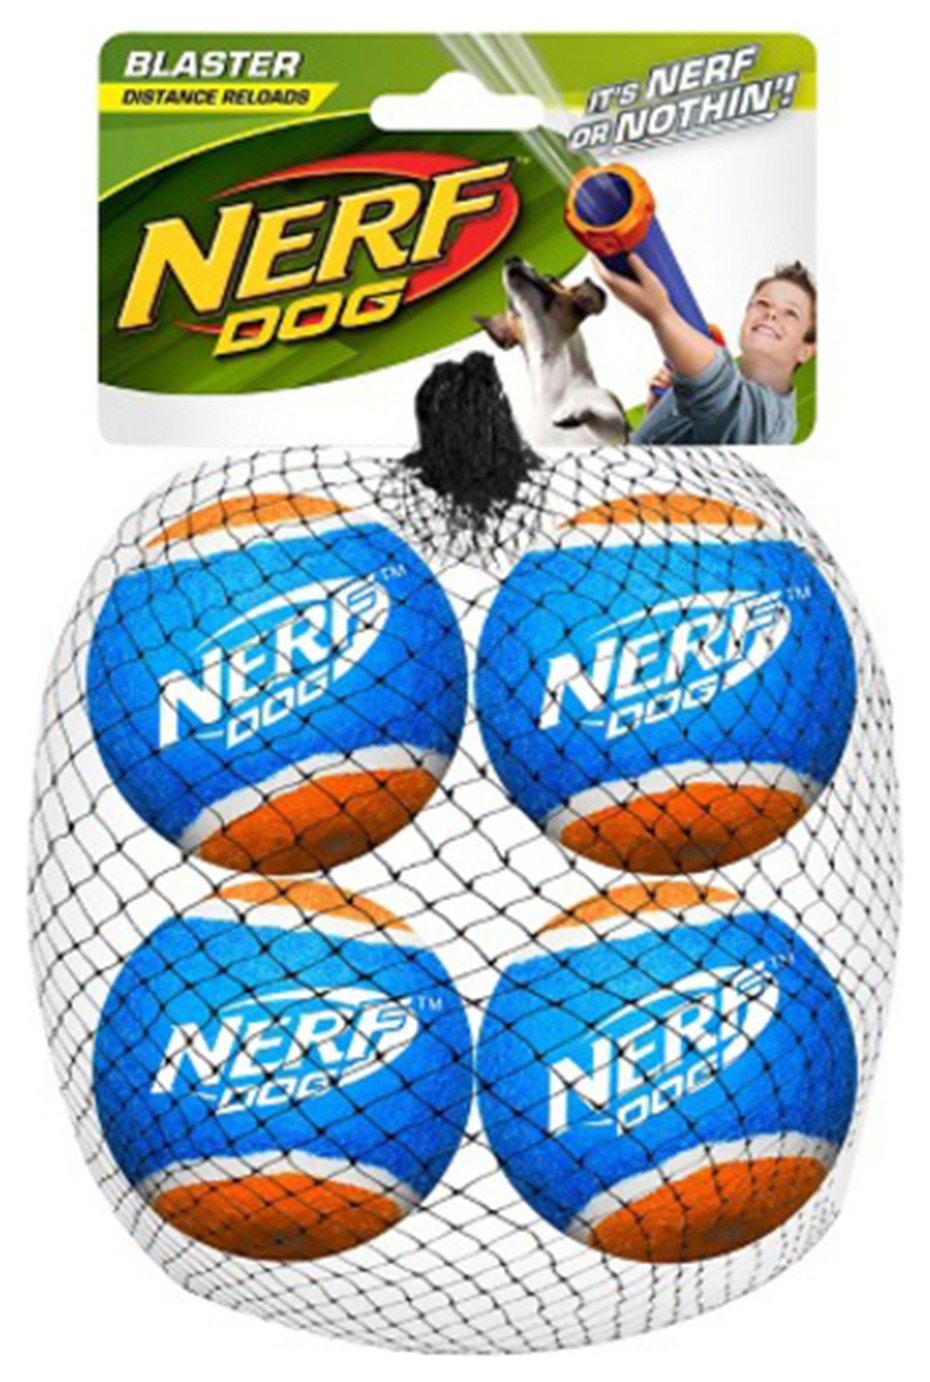 Nerf Dog Tennis Ball Blaster Distance Refill